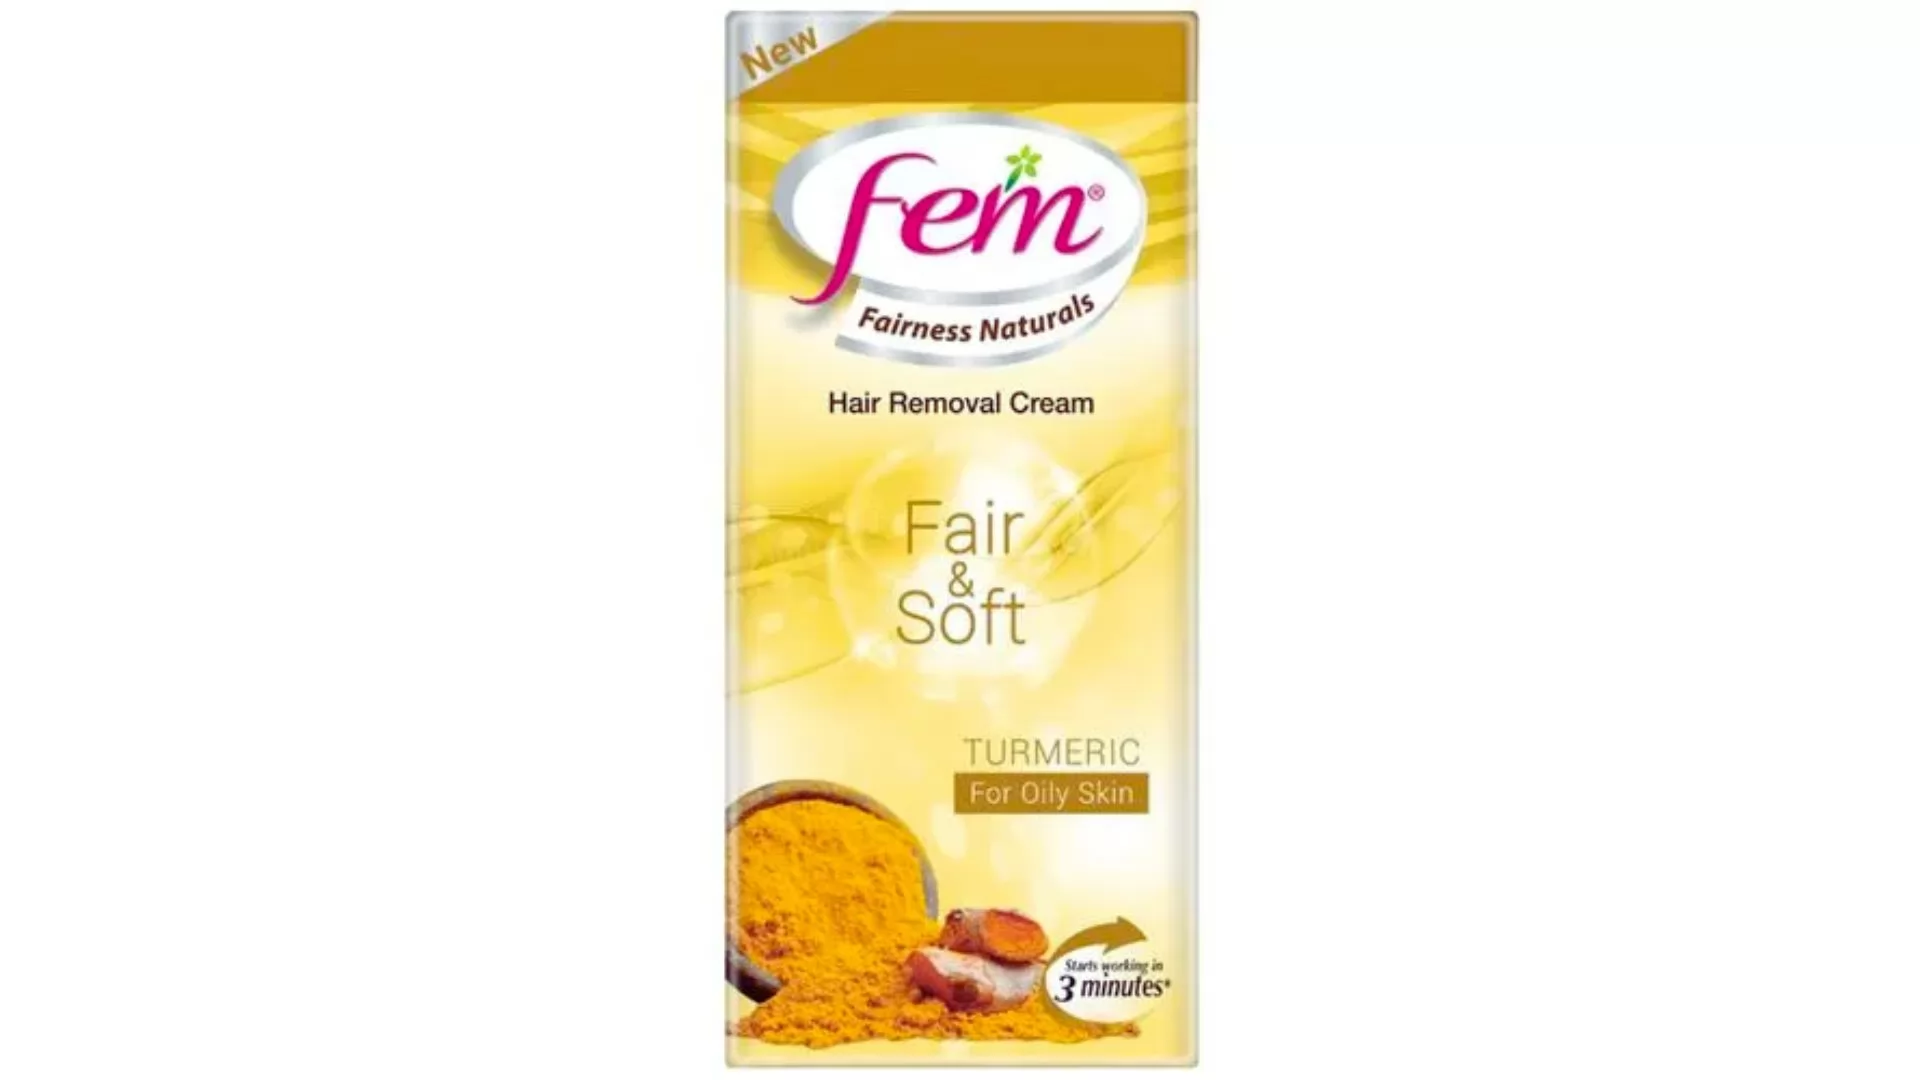 Fem Fair & Soft hair removal cream